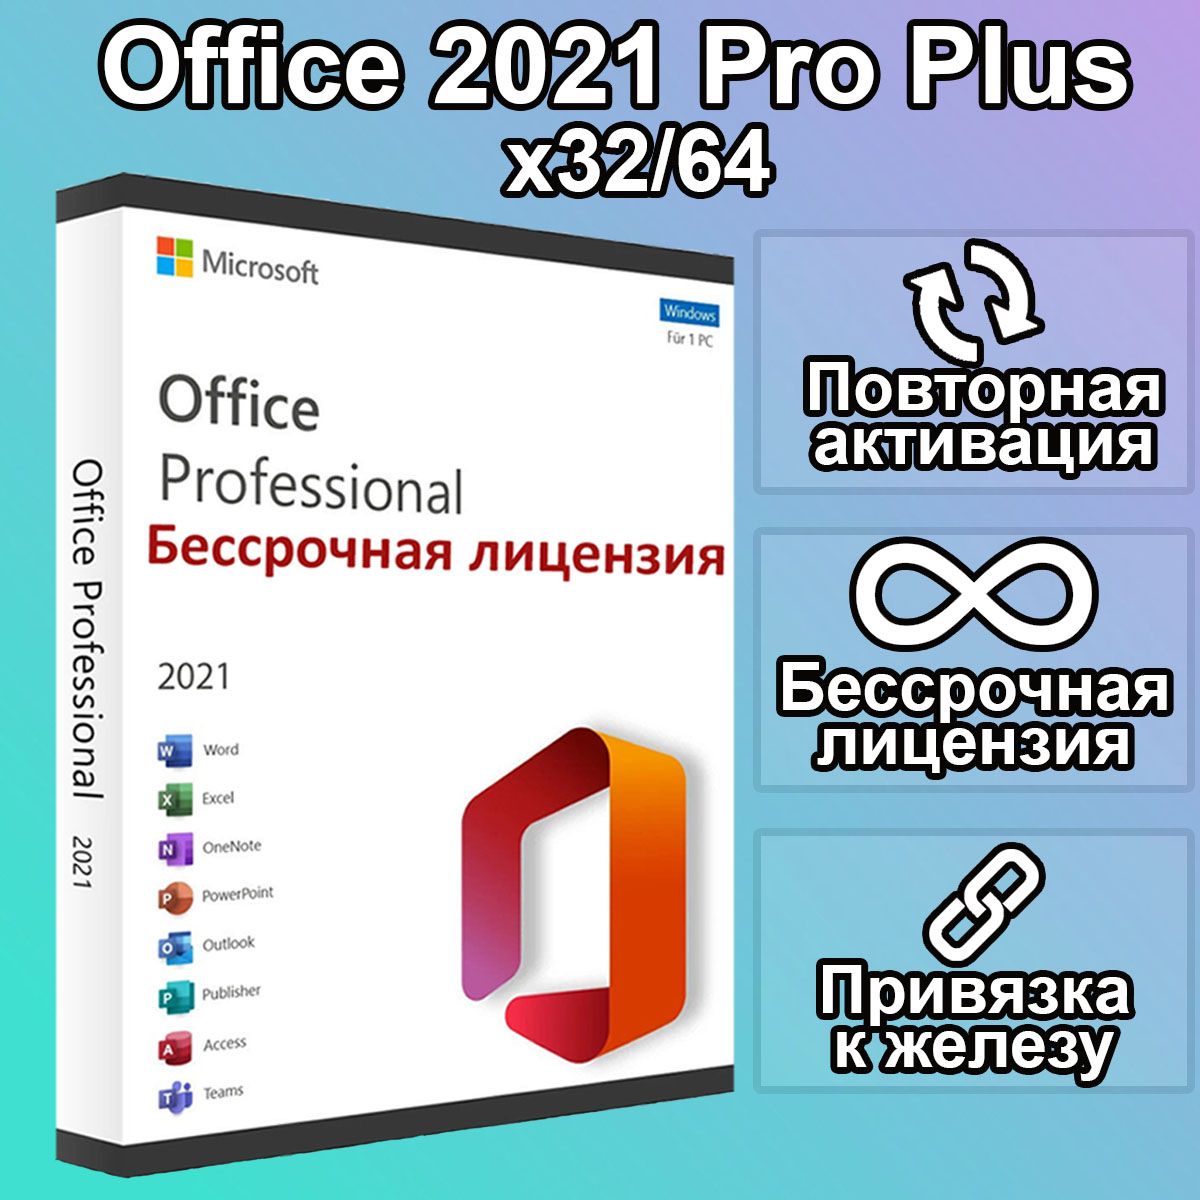 Microsoft Office 2021 Pro Plus бессрочный. Office 2021 Pro Plus бессрочный Windows. Офис 2021 про плюс купить. Office 2021 Pro Plus бессрочный без привязки. Микрософт офис 2021